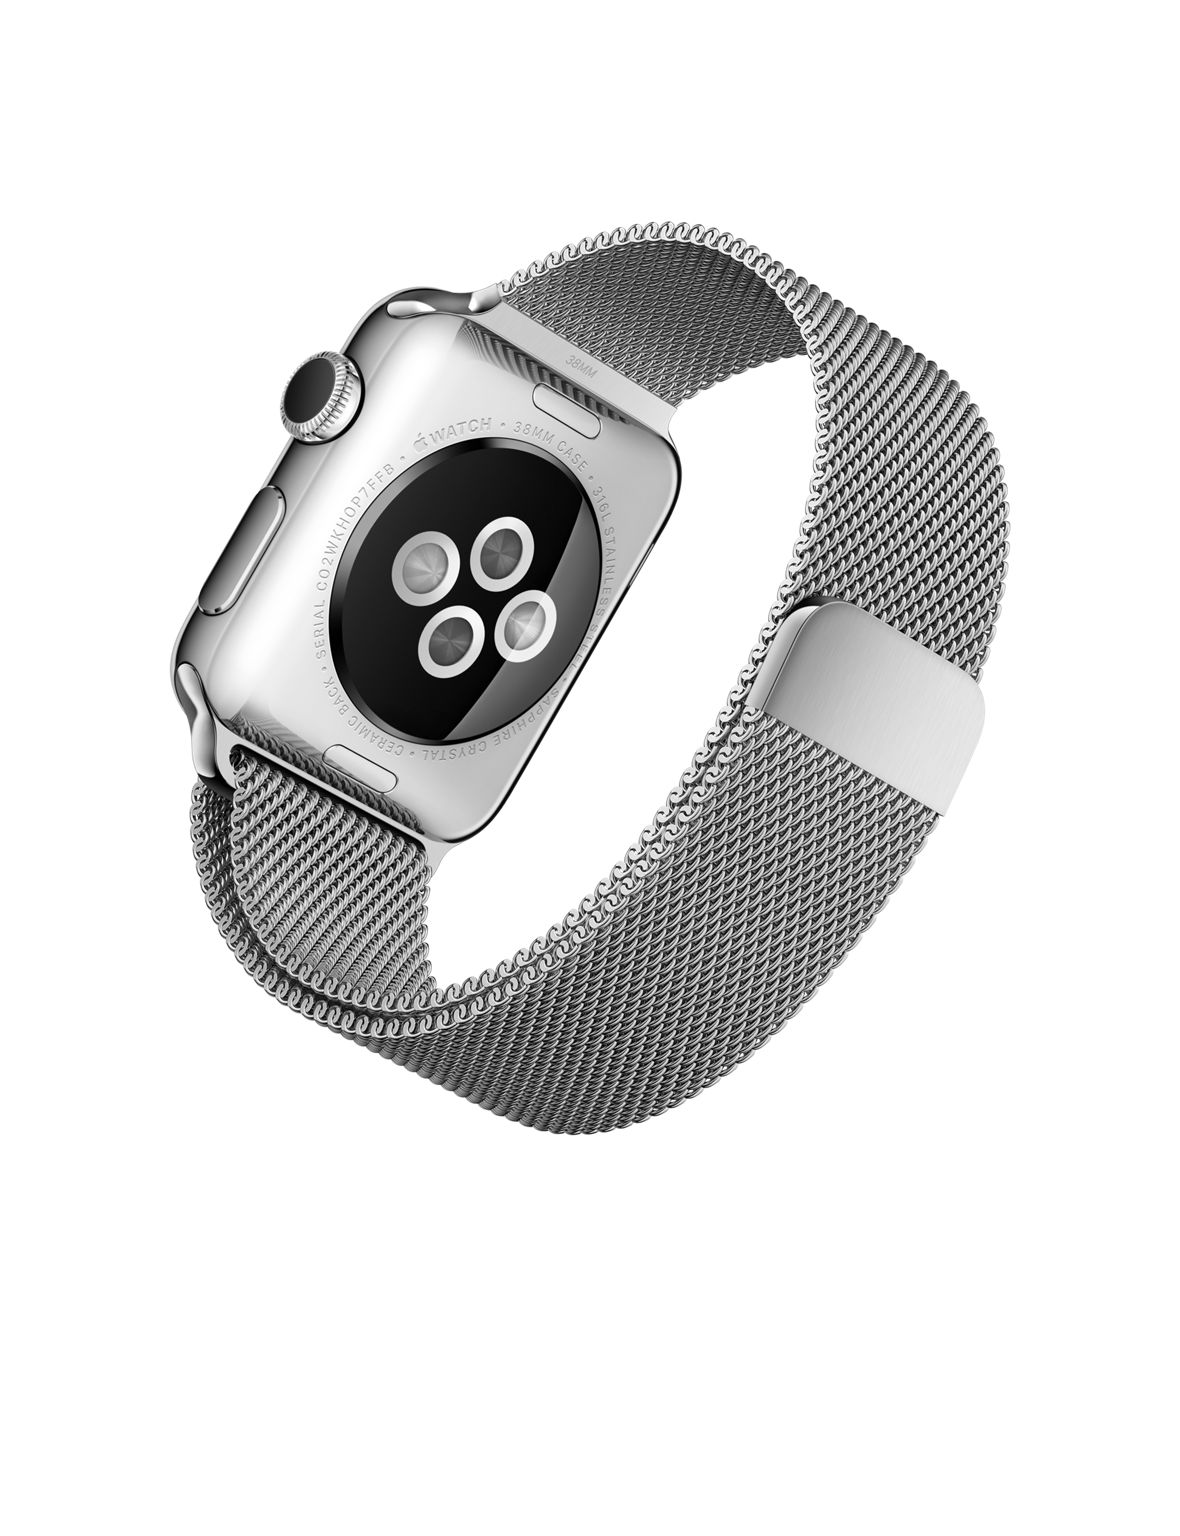 Series 7 41mm. Эпл вотч 7 41мм Silver. Эпл вотч 41 мм. Эппл вотч 7 металлический. Apple watch 8 41mm Black/White.